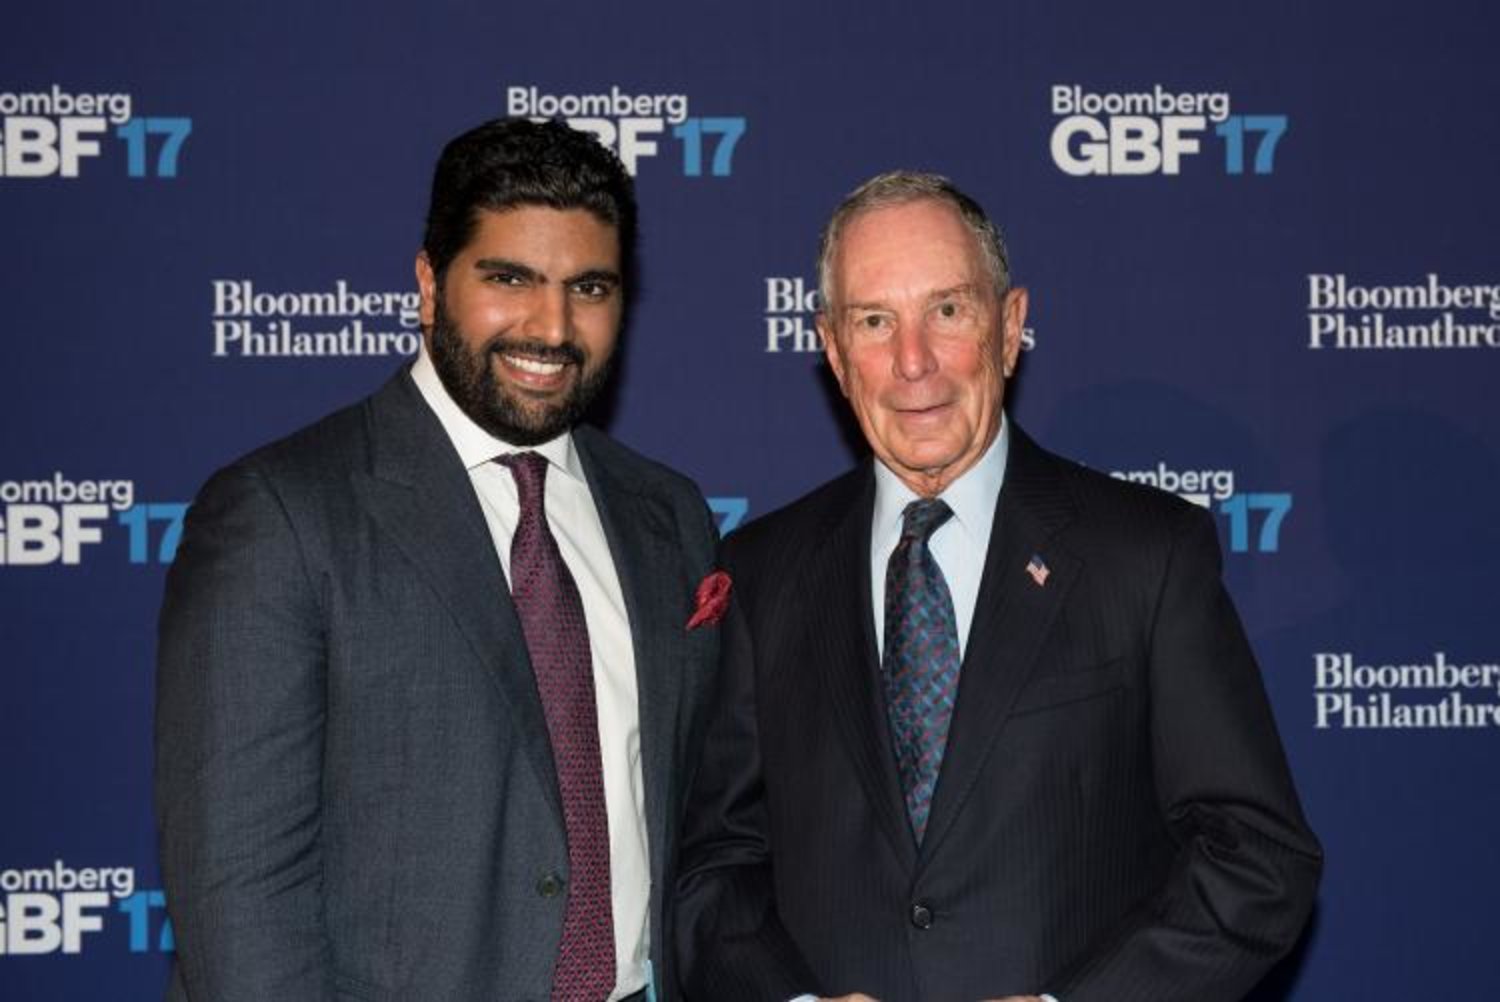 Chairman of SRMG Prince Bader bin Abdullah al-Saud and founder of Bloomberg Michael Bloomberg (SRMG)